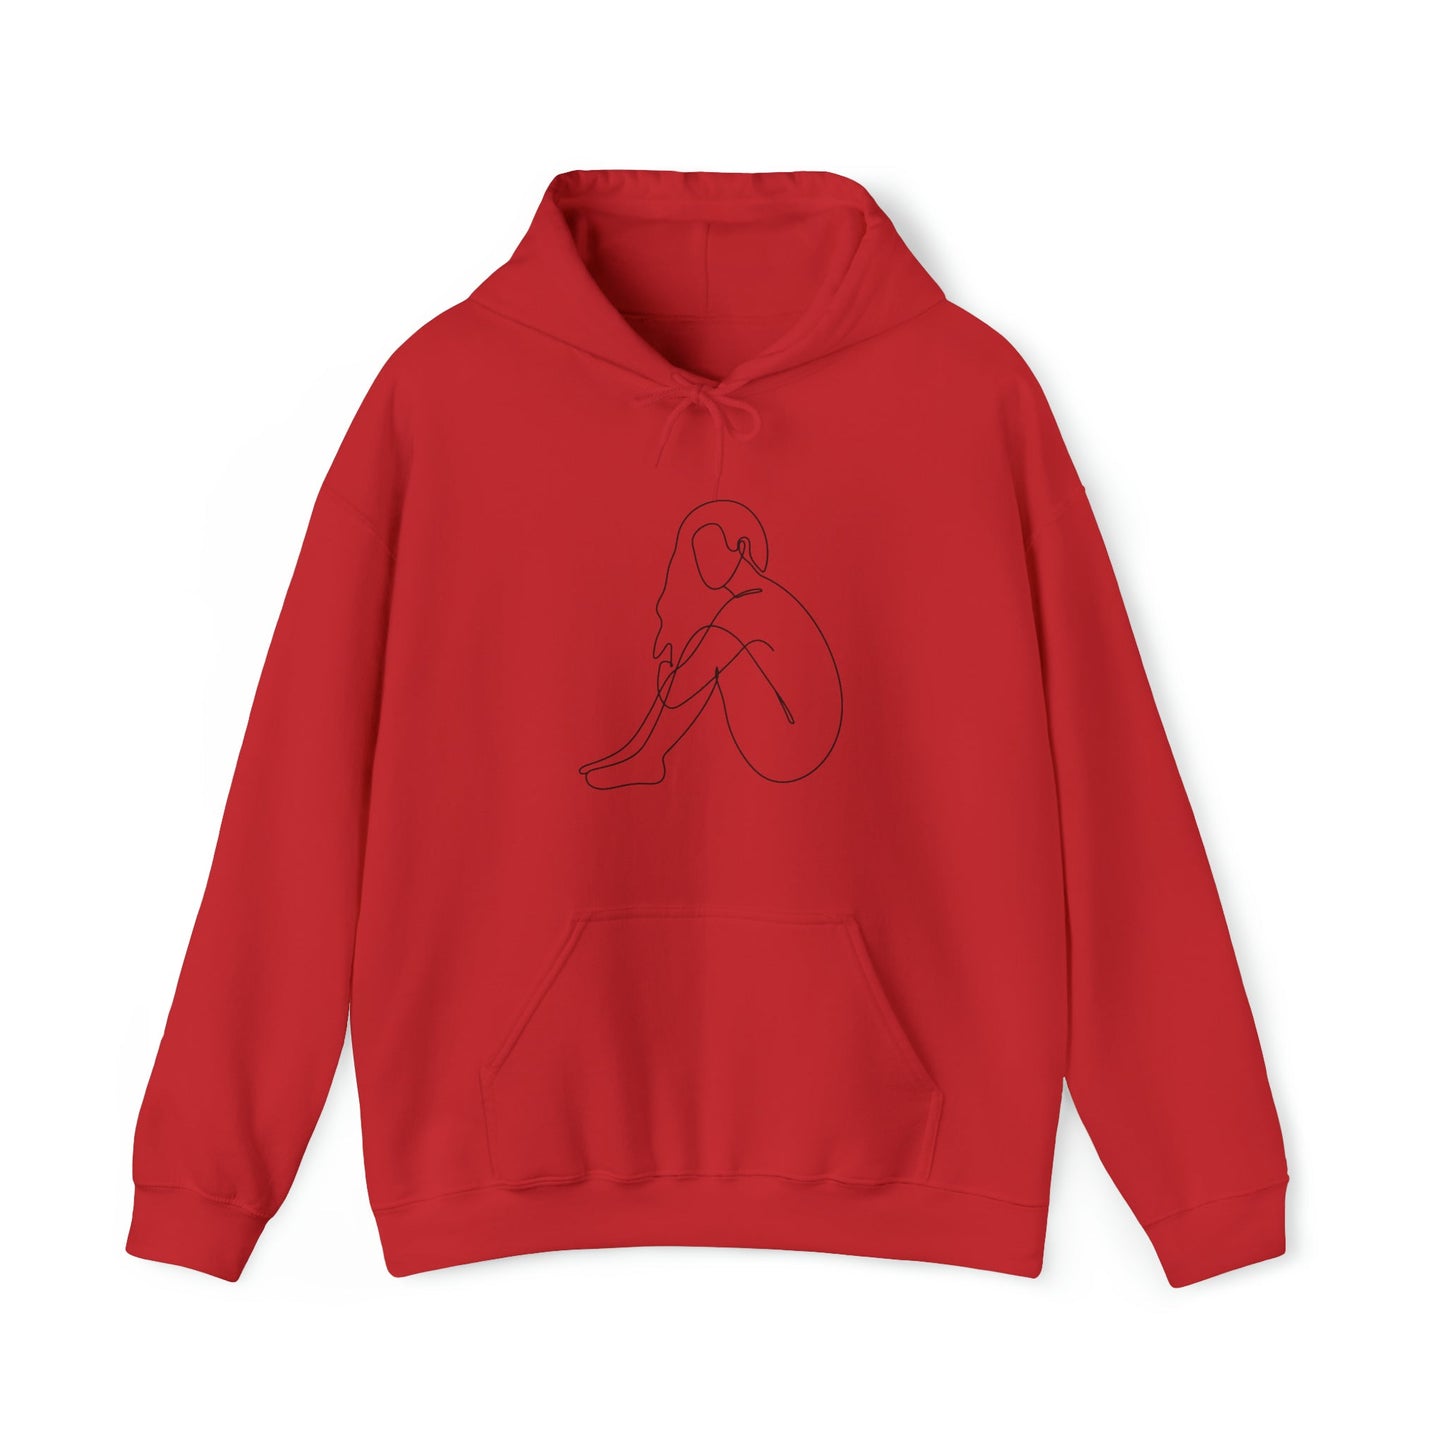 Female Form Graphic Print Unisex Hooded Sweatshirt